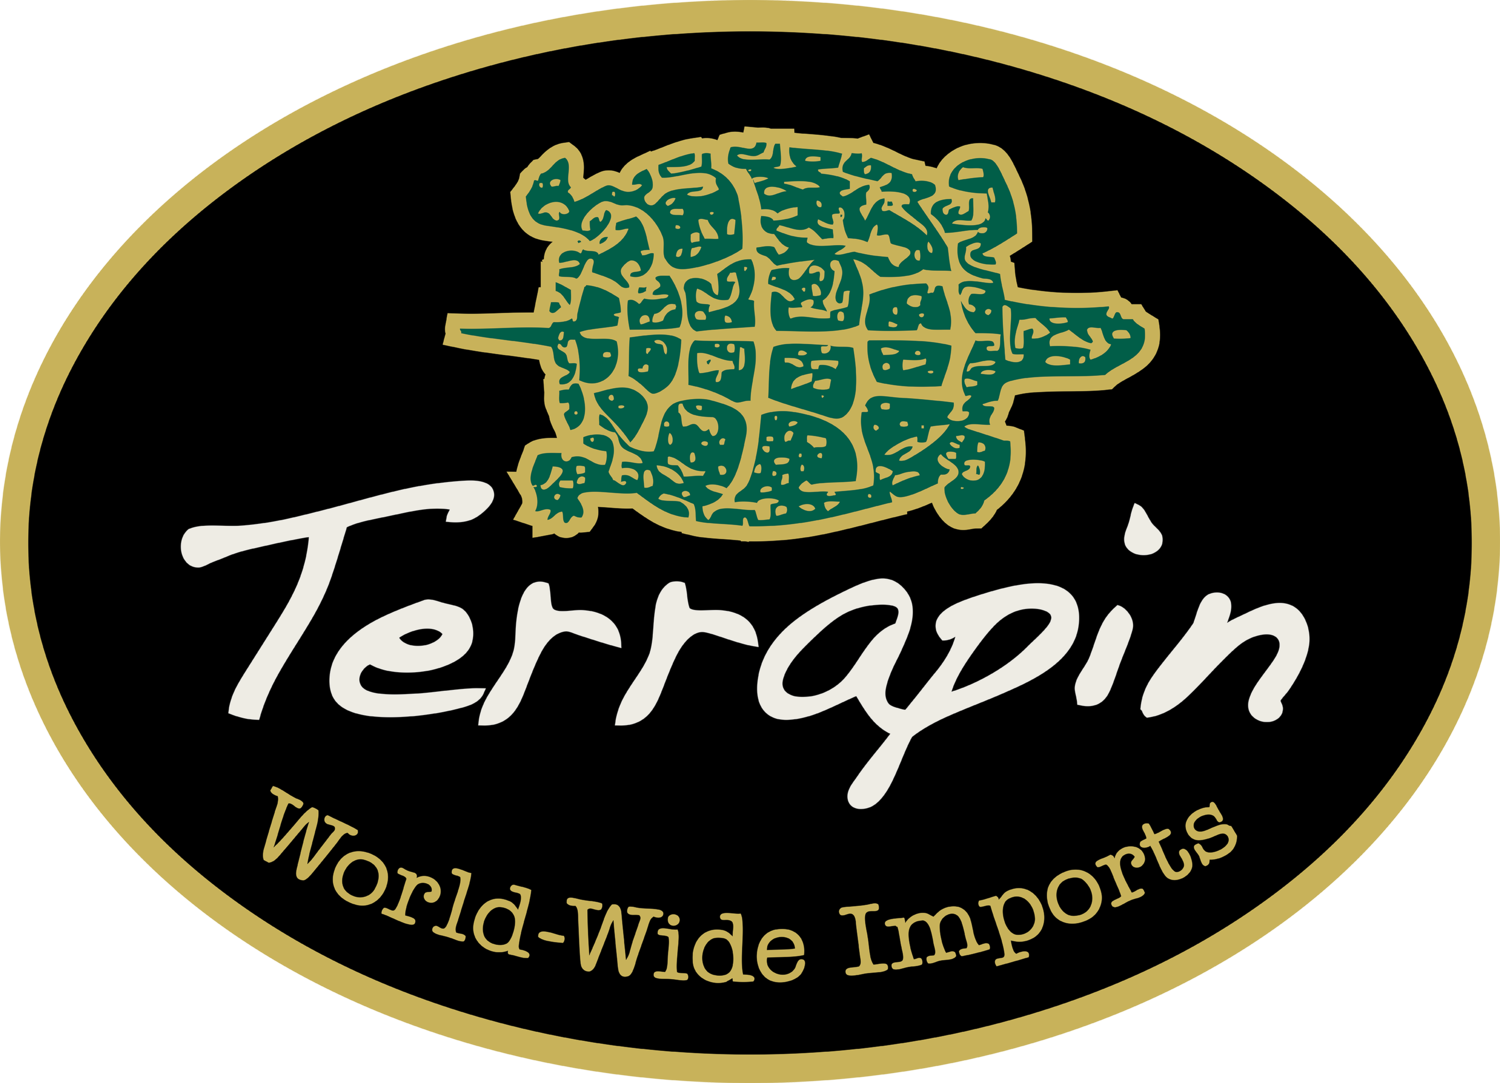 Terrapin World Imports